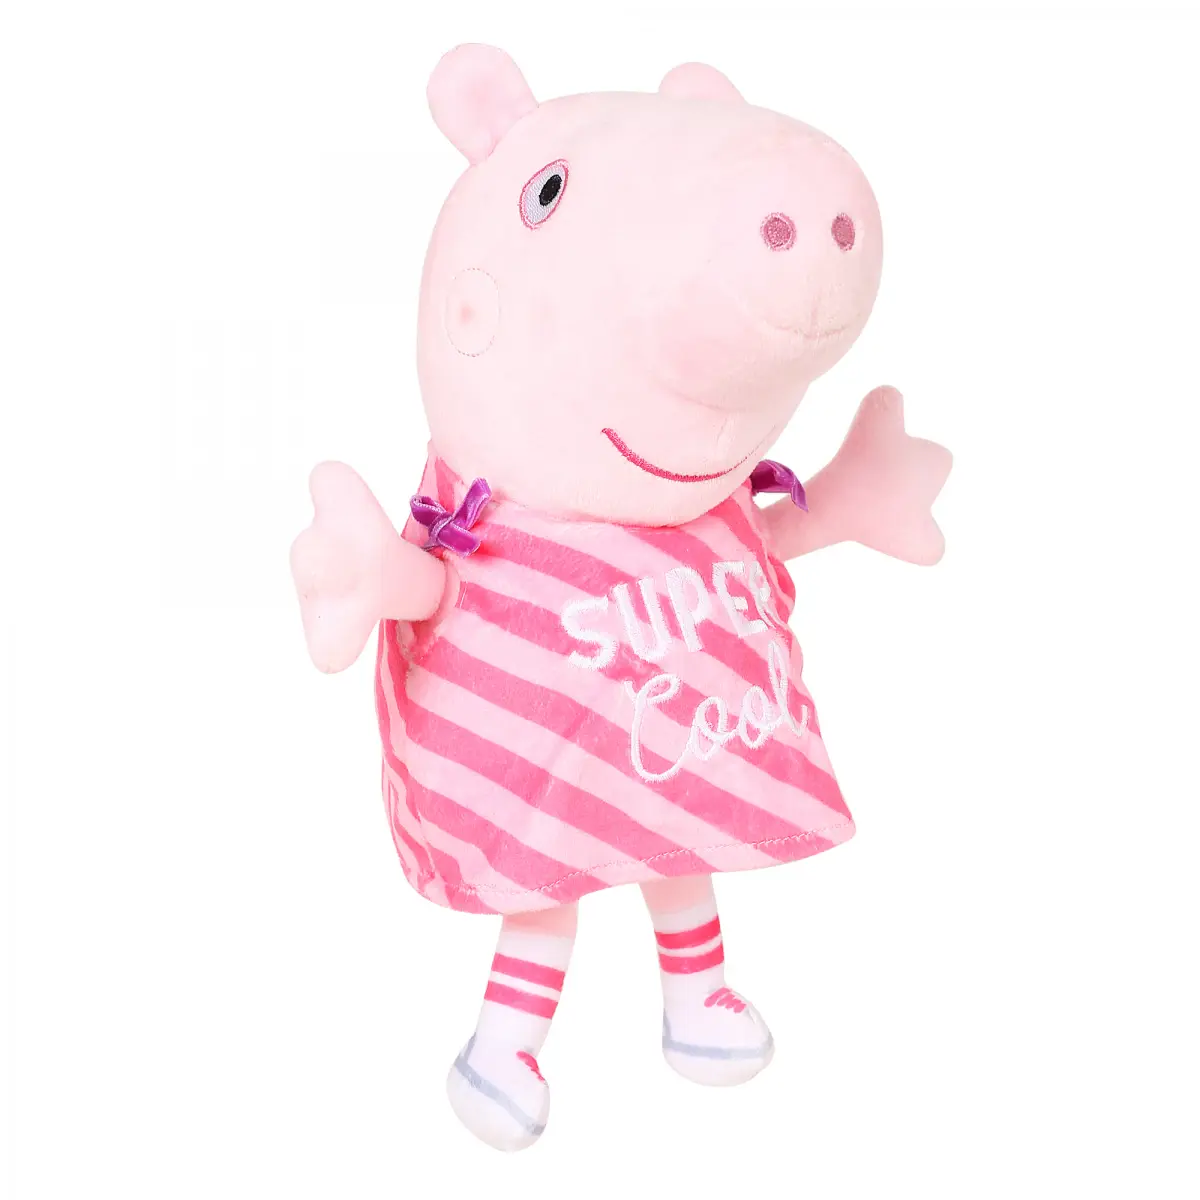 Peppa Pig Soft Toys for Kids, 30cm, 18M+, Pink